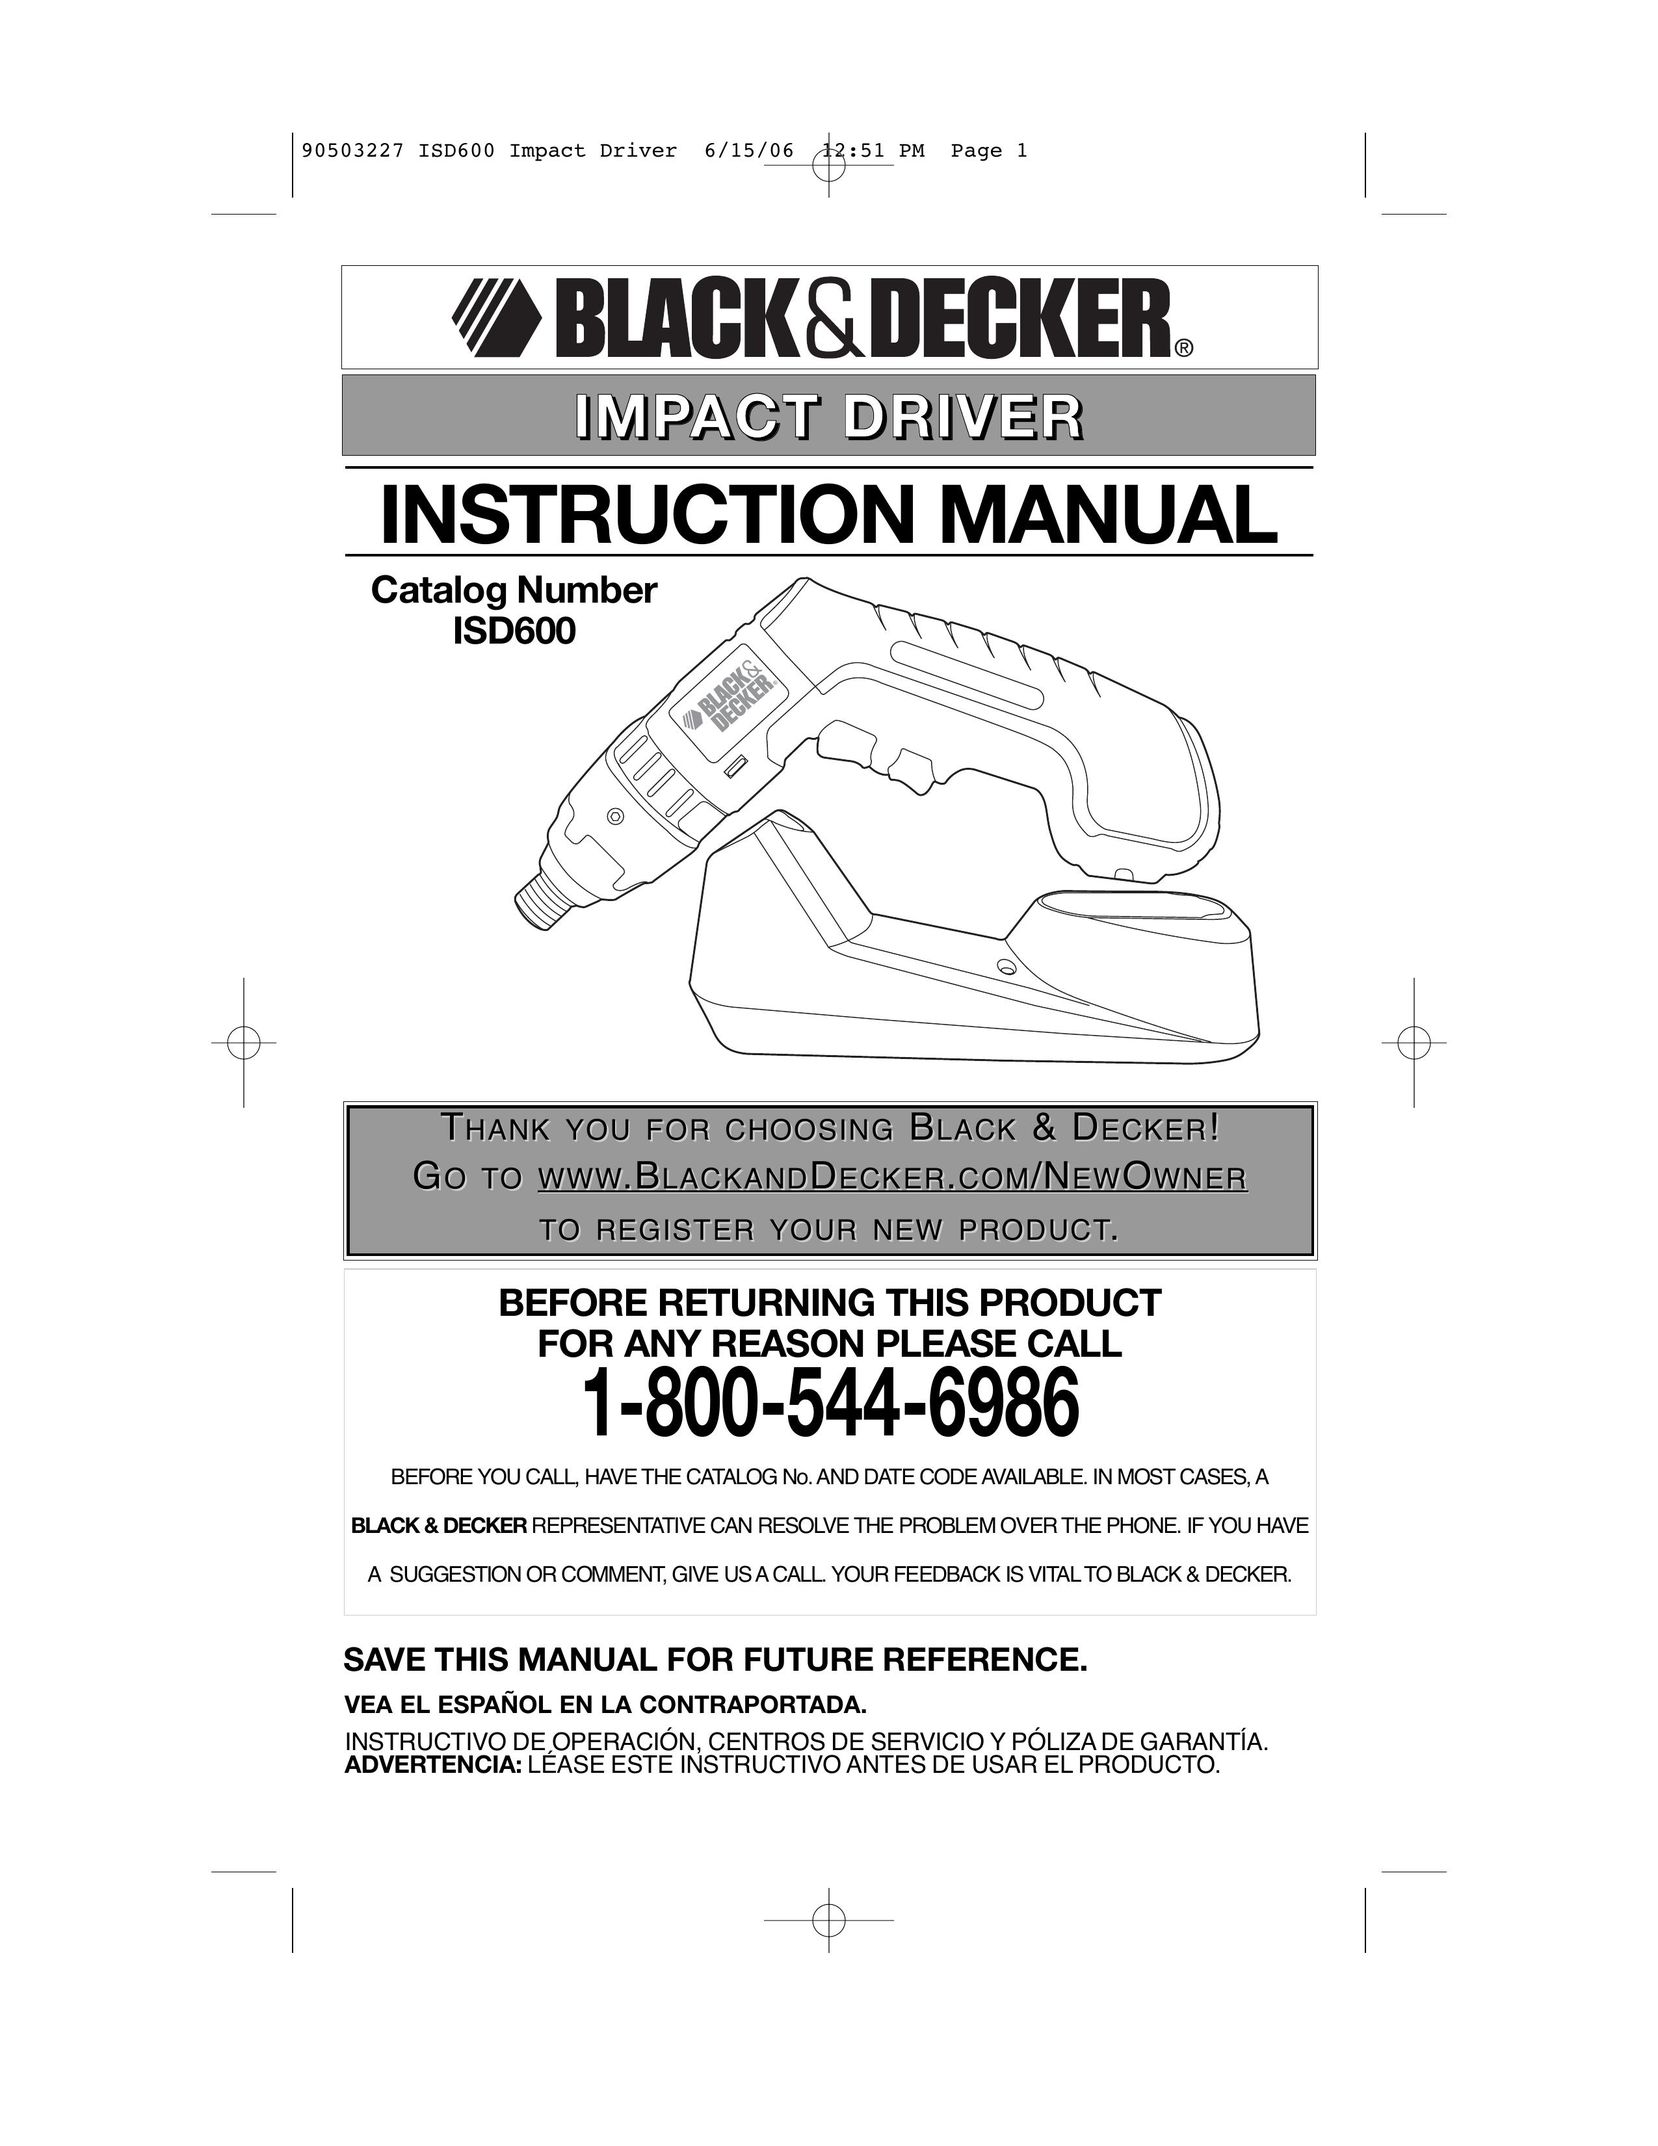 Black & Decker ISD600 Impact Driver User Manual